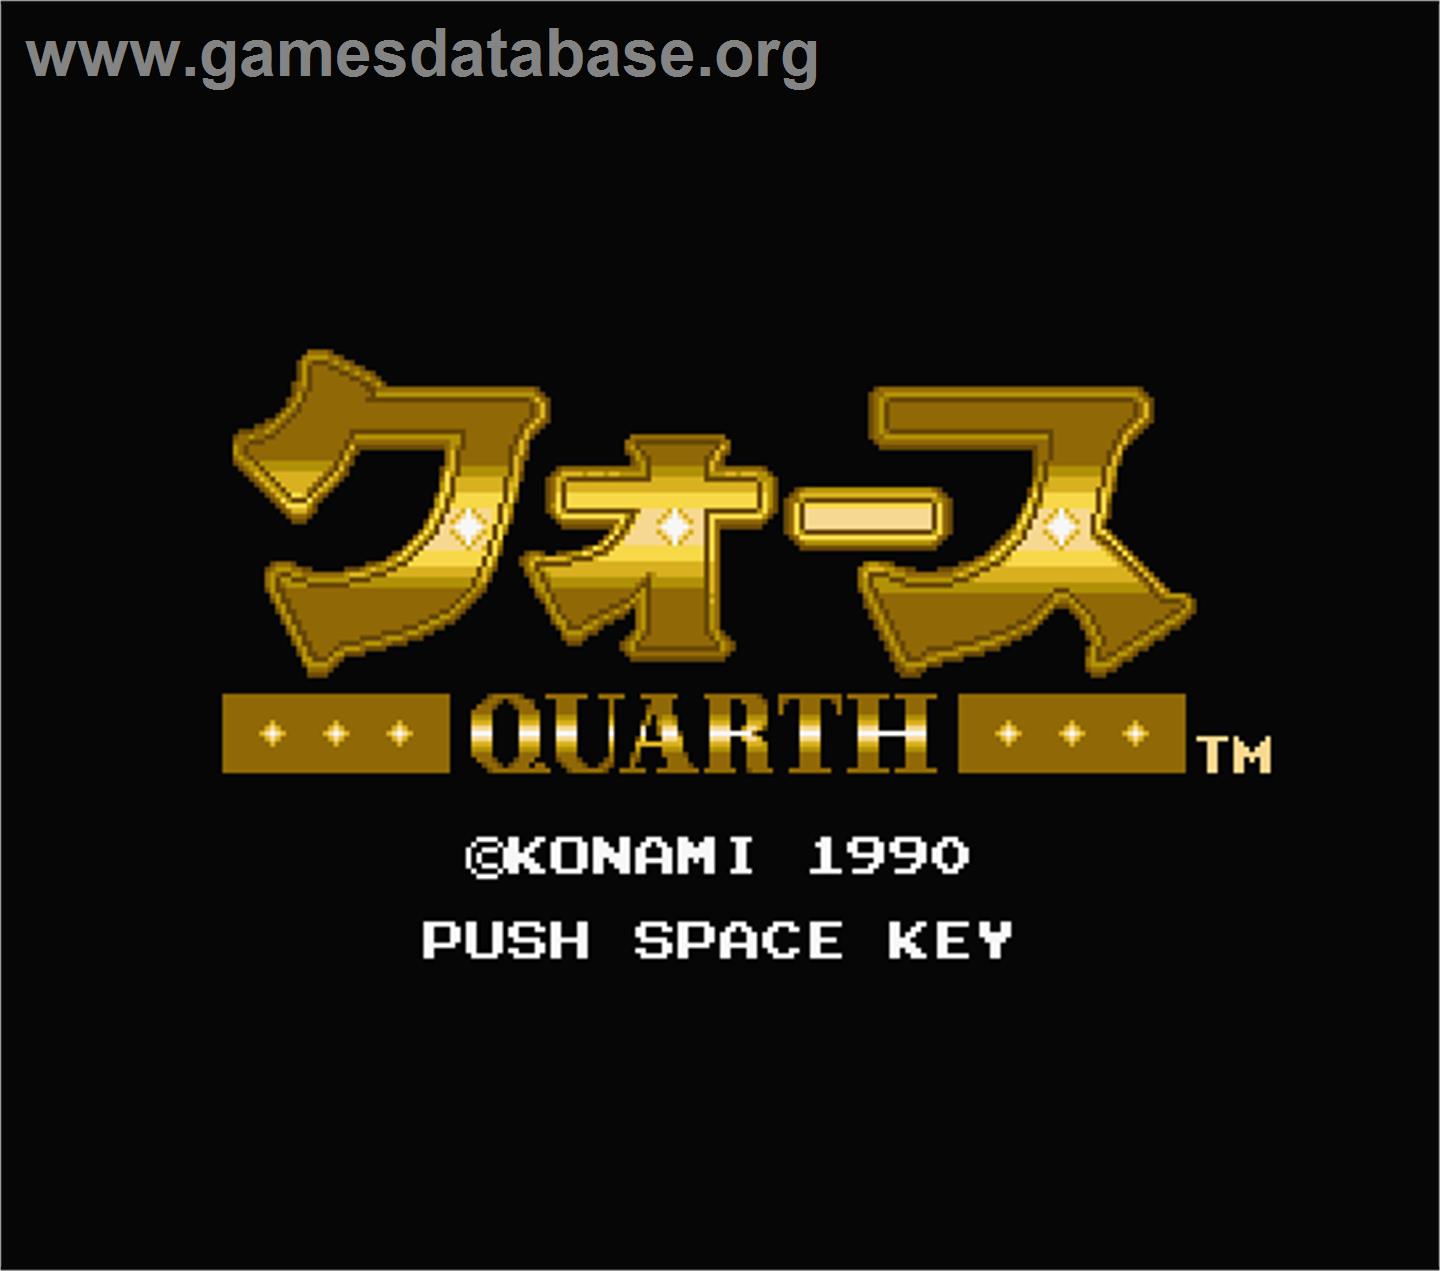 Quarth - MSX 2 - Artwork - Title Screen